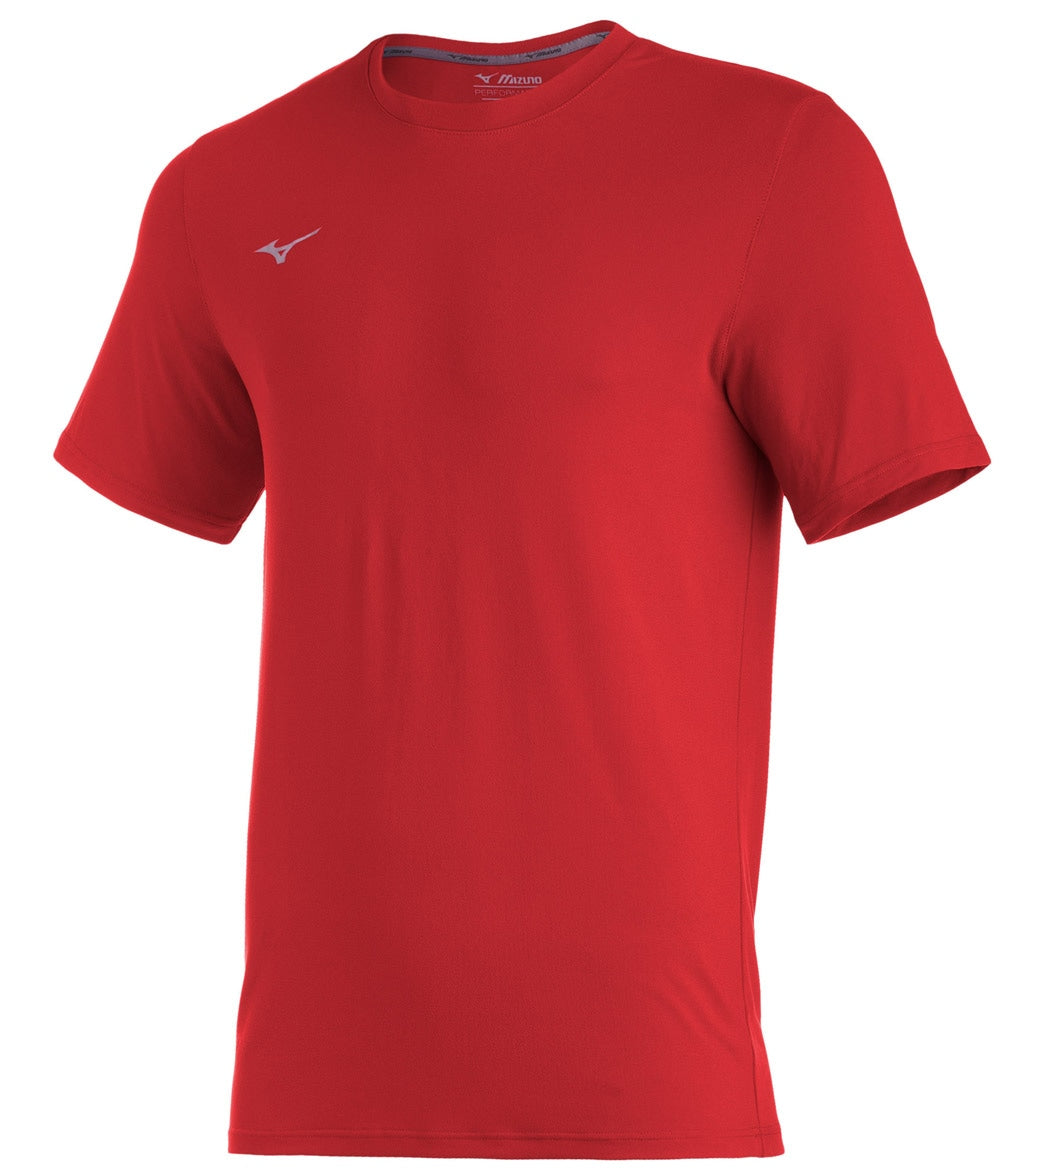 Mizuno Men's Comp Diamond Short Sleeve Crew Shirt - Red Large - Swimoutlet.com